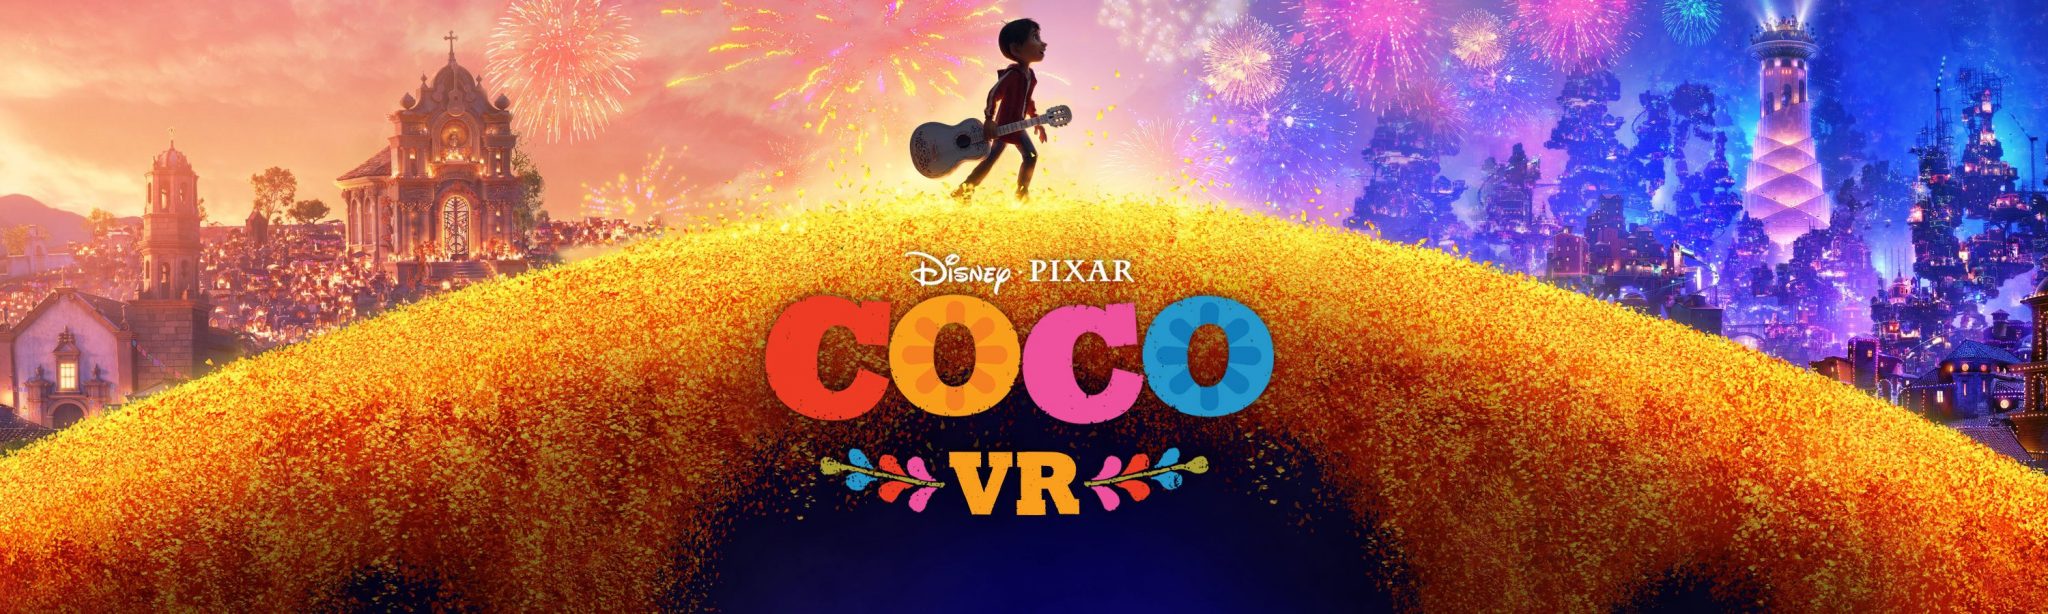 Disney-Pixar Announces COCO VR Experience!